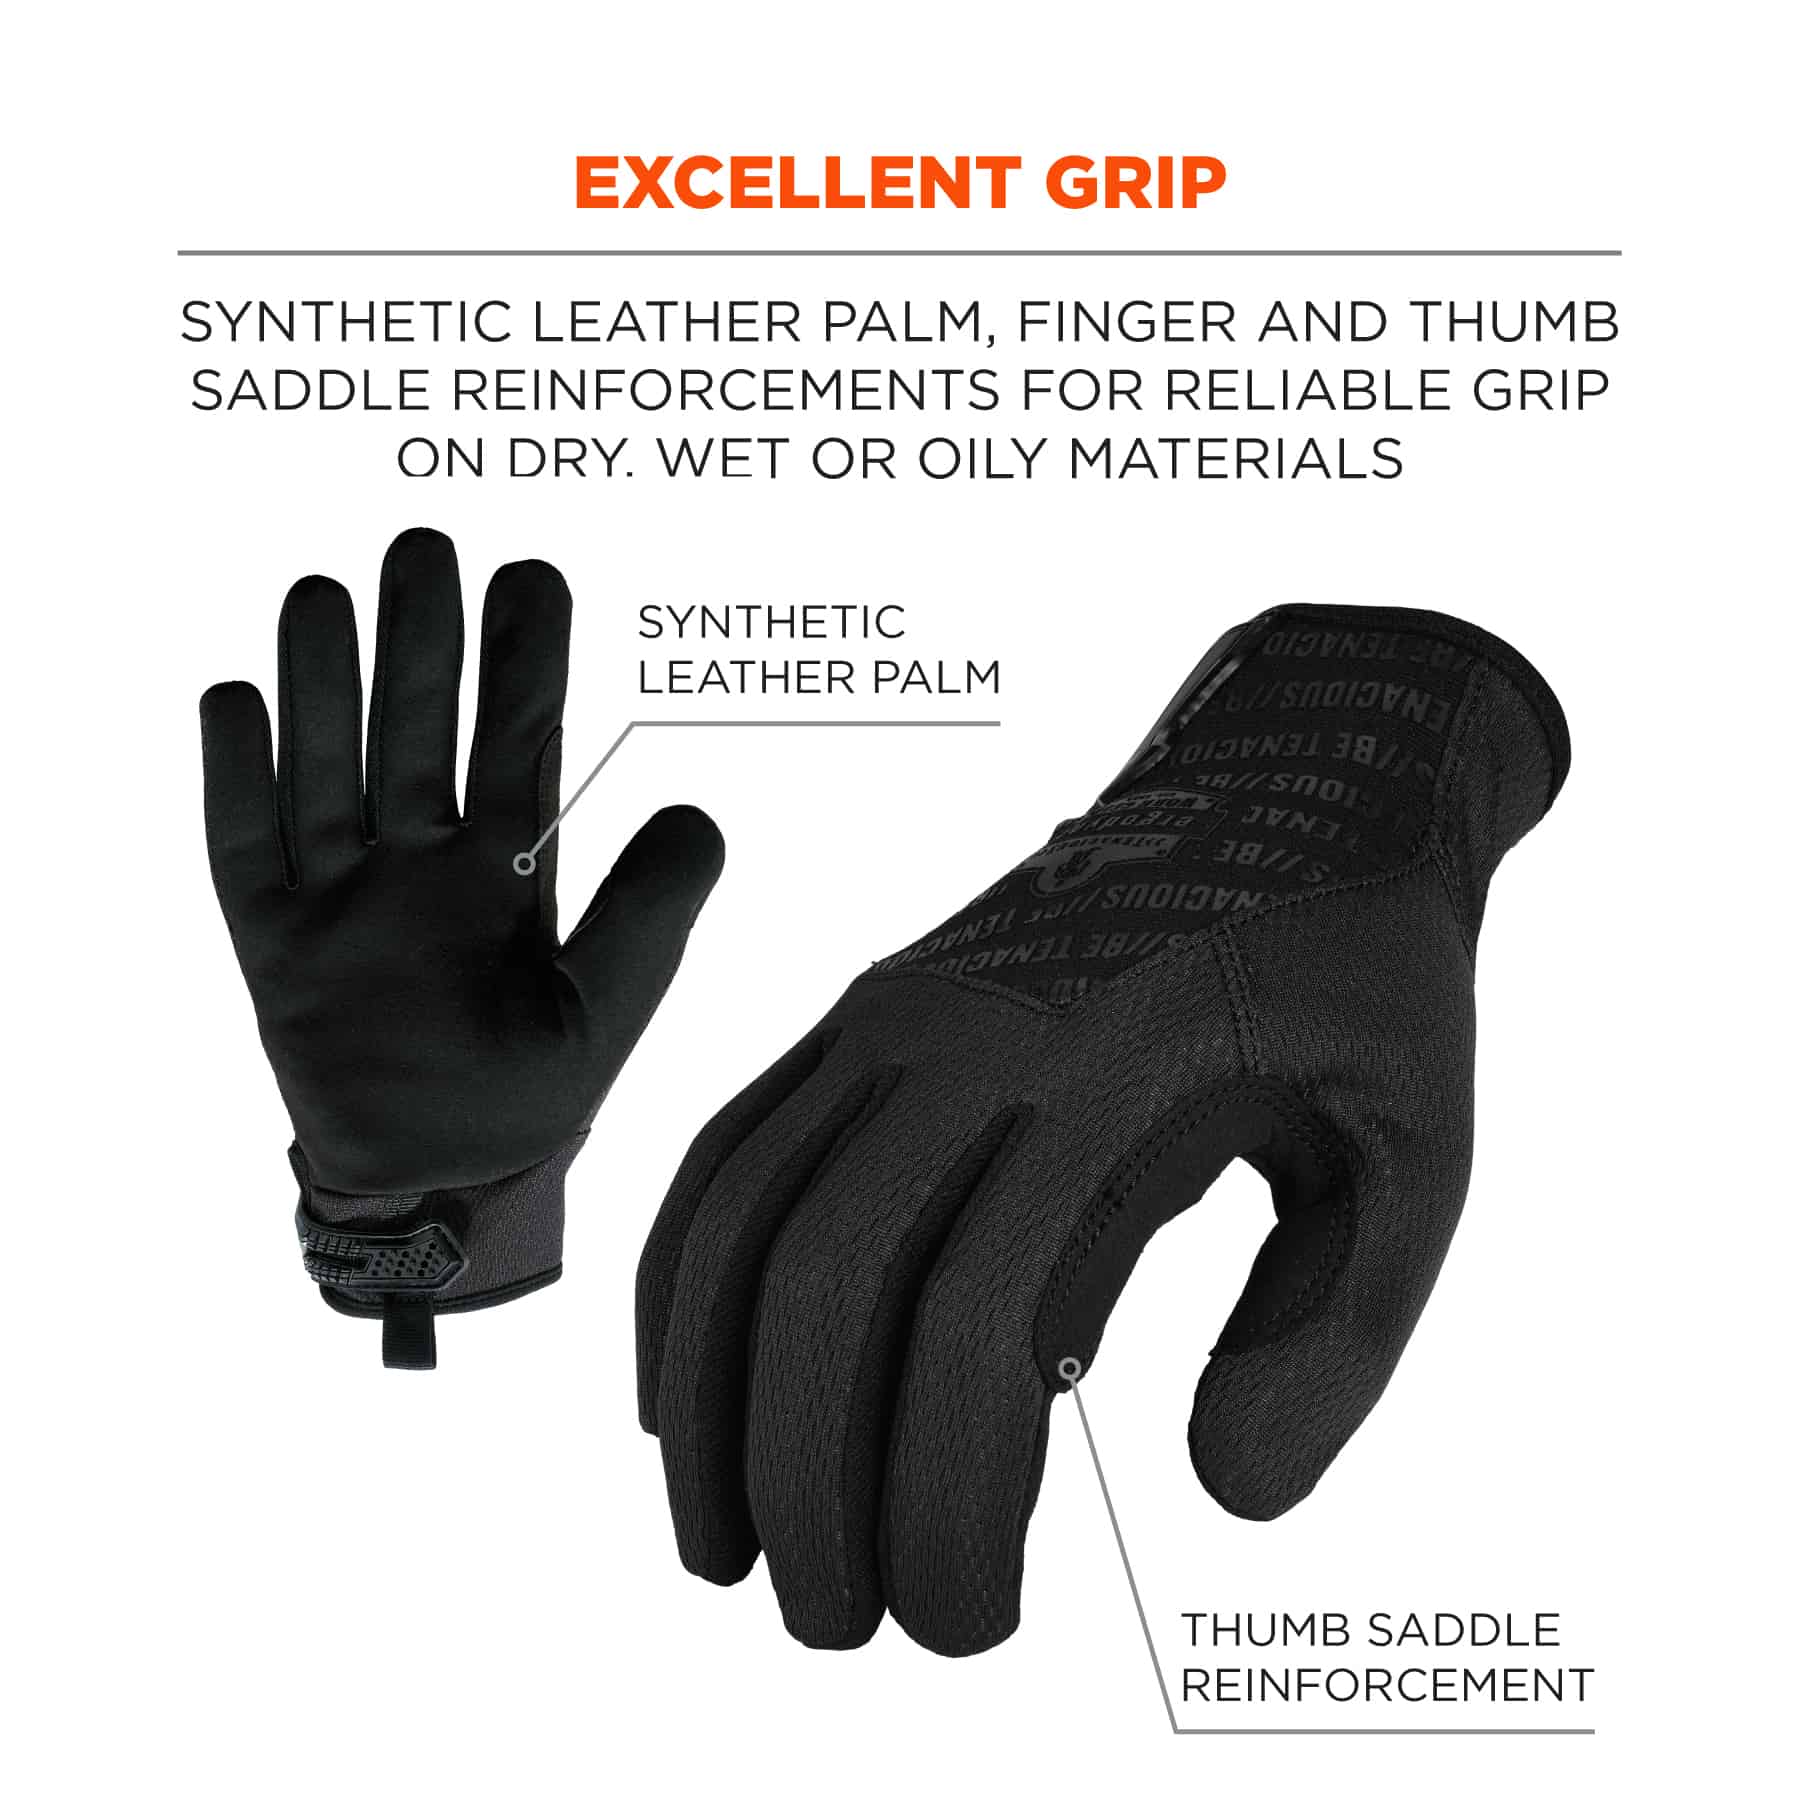 https://www.ergodyne.com/sites/default/files/product-images/17576-812blk-high-dexterity-black-tactical-gloves-excellent-grip.jpg